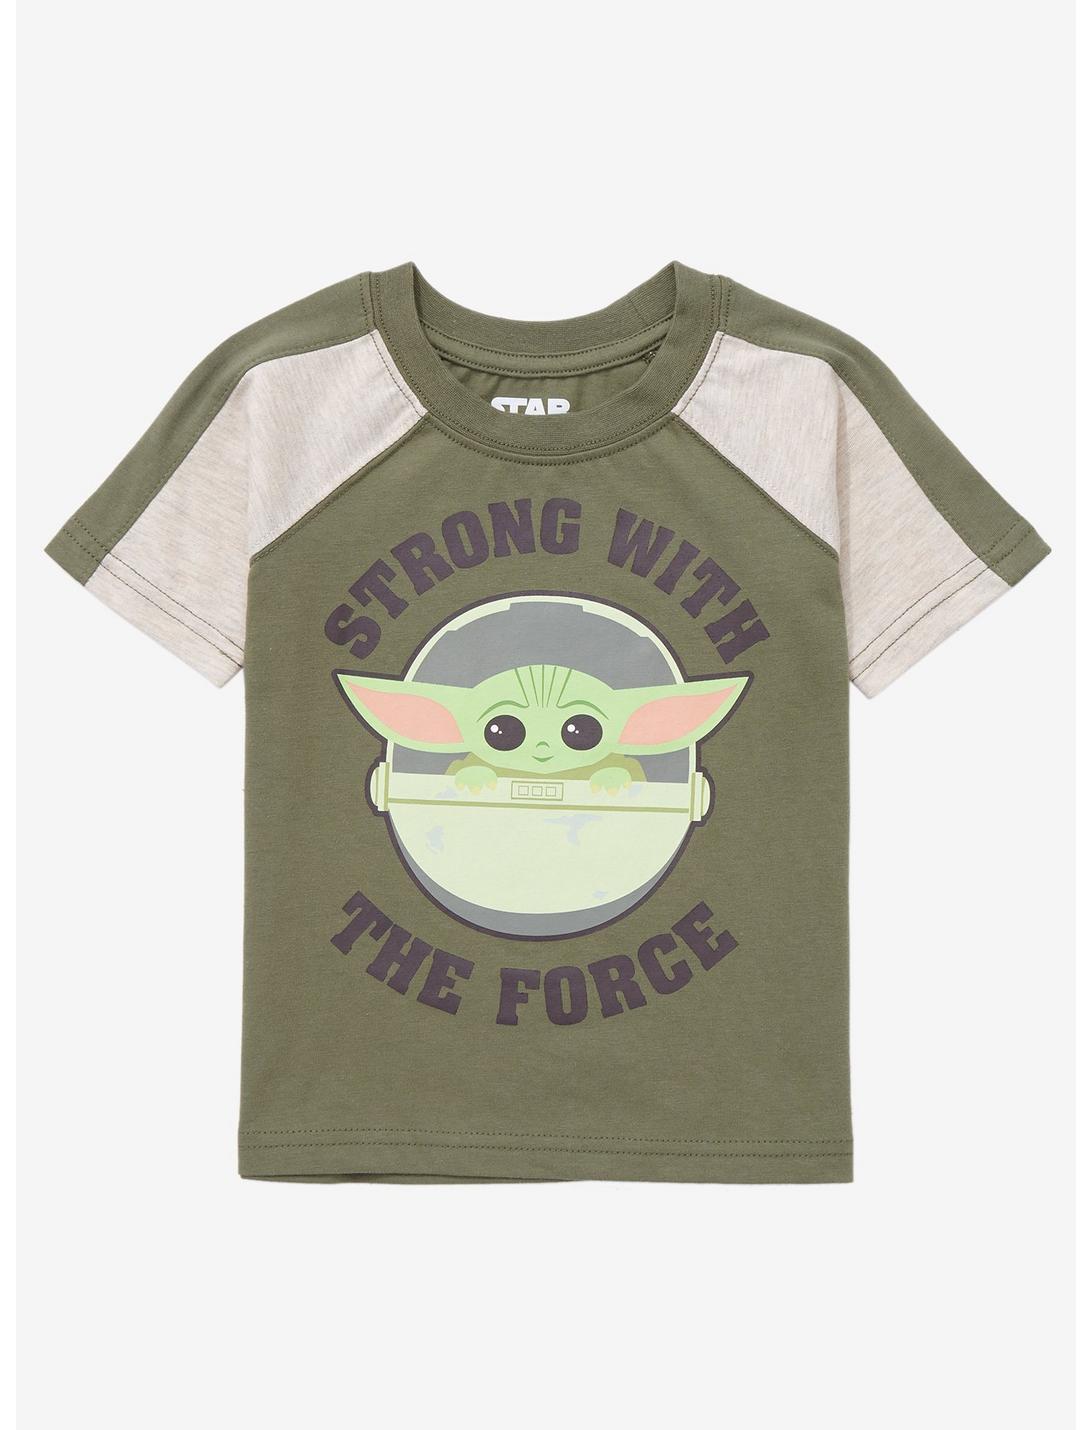 Kids Youth Star Wars Baby Yoda Grogu Baseball Hat Cap Black Force Is Strong